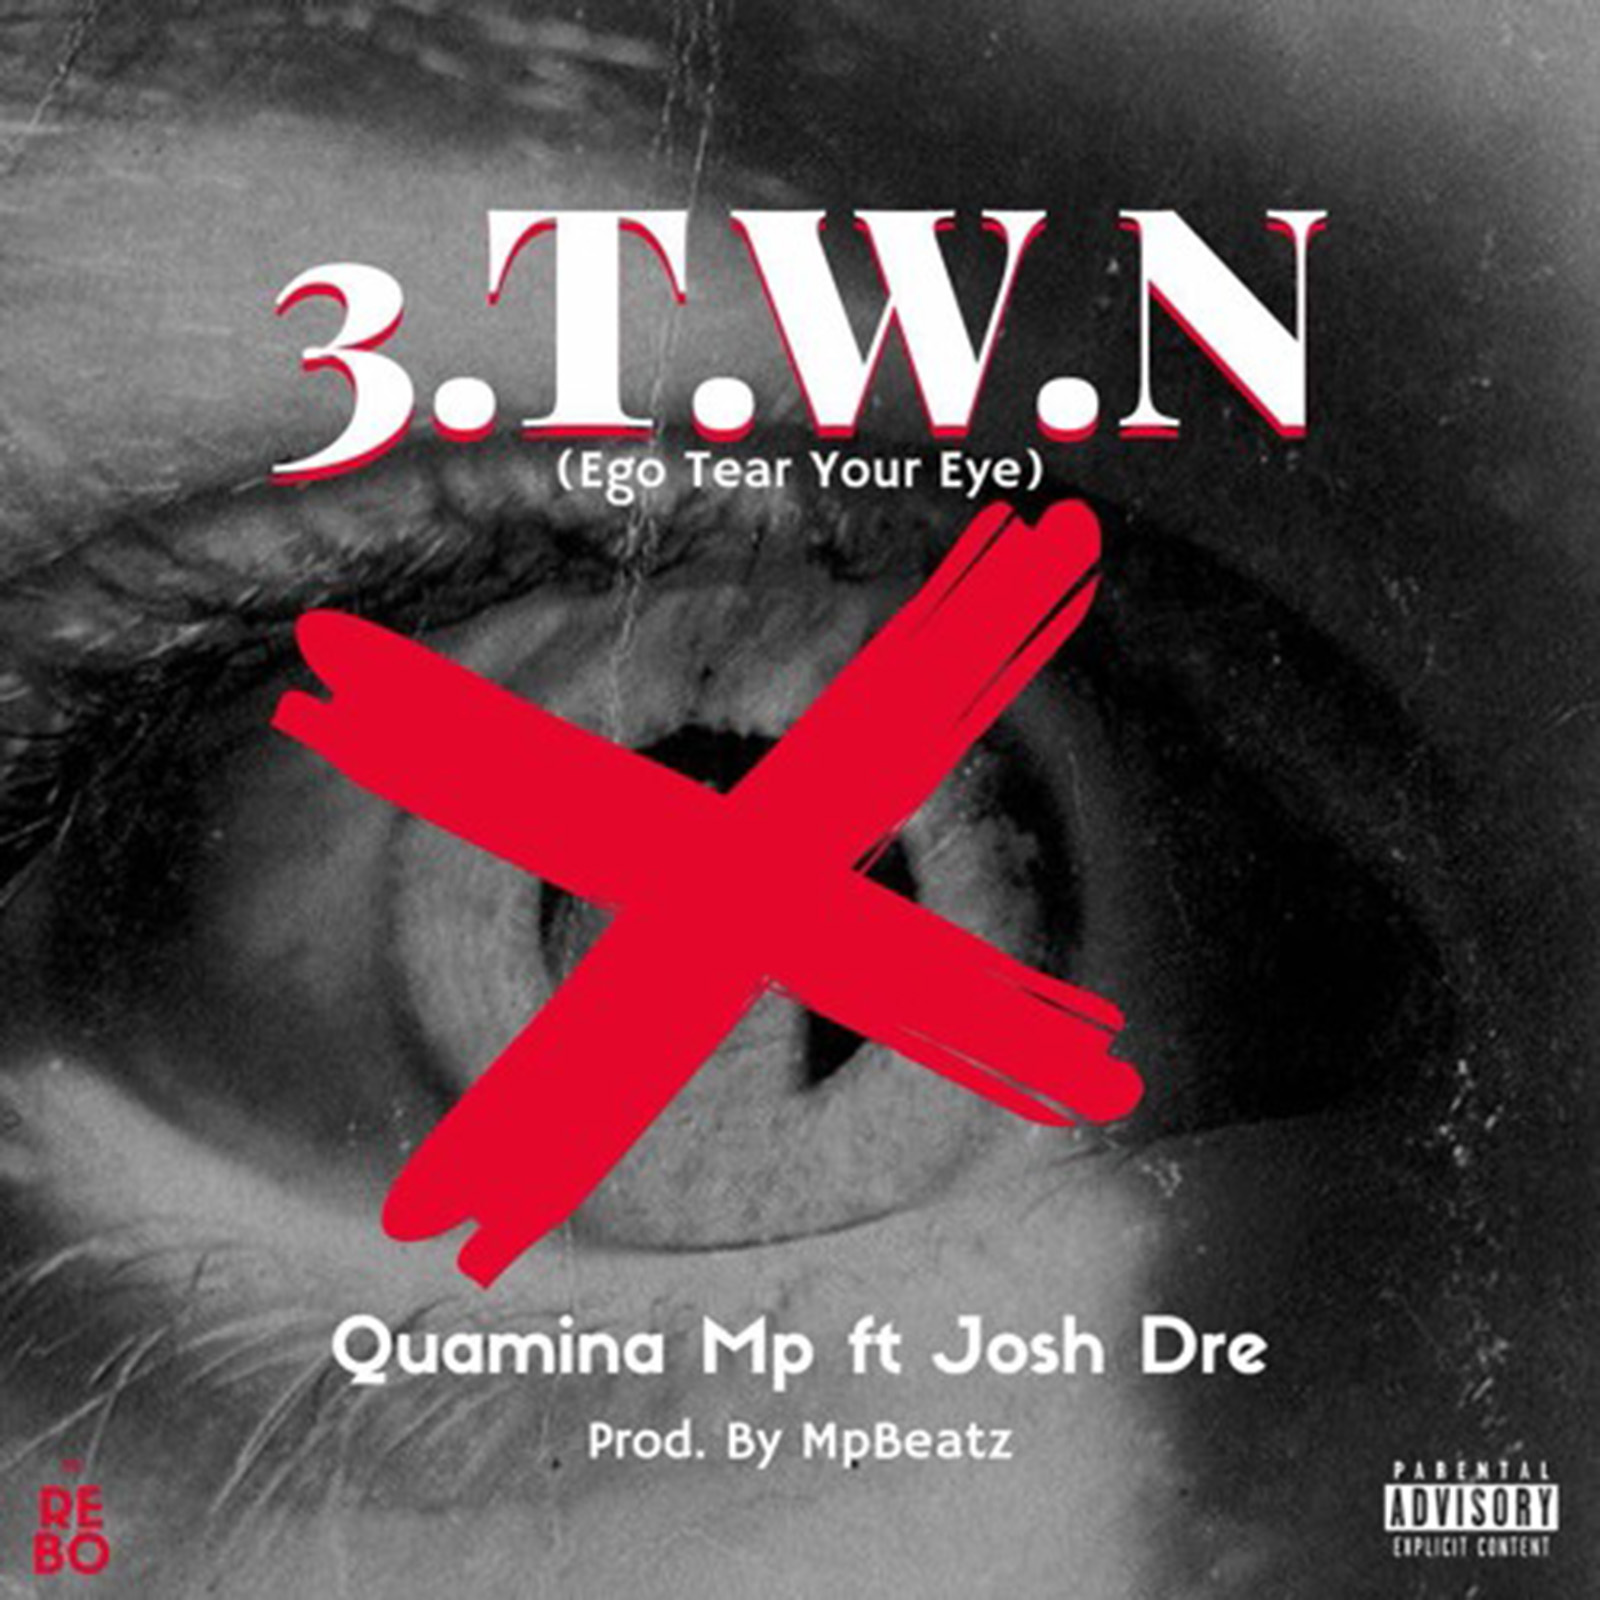 3.T.W.N by Quamina Mp feat. Josh Dre